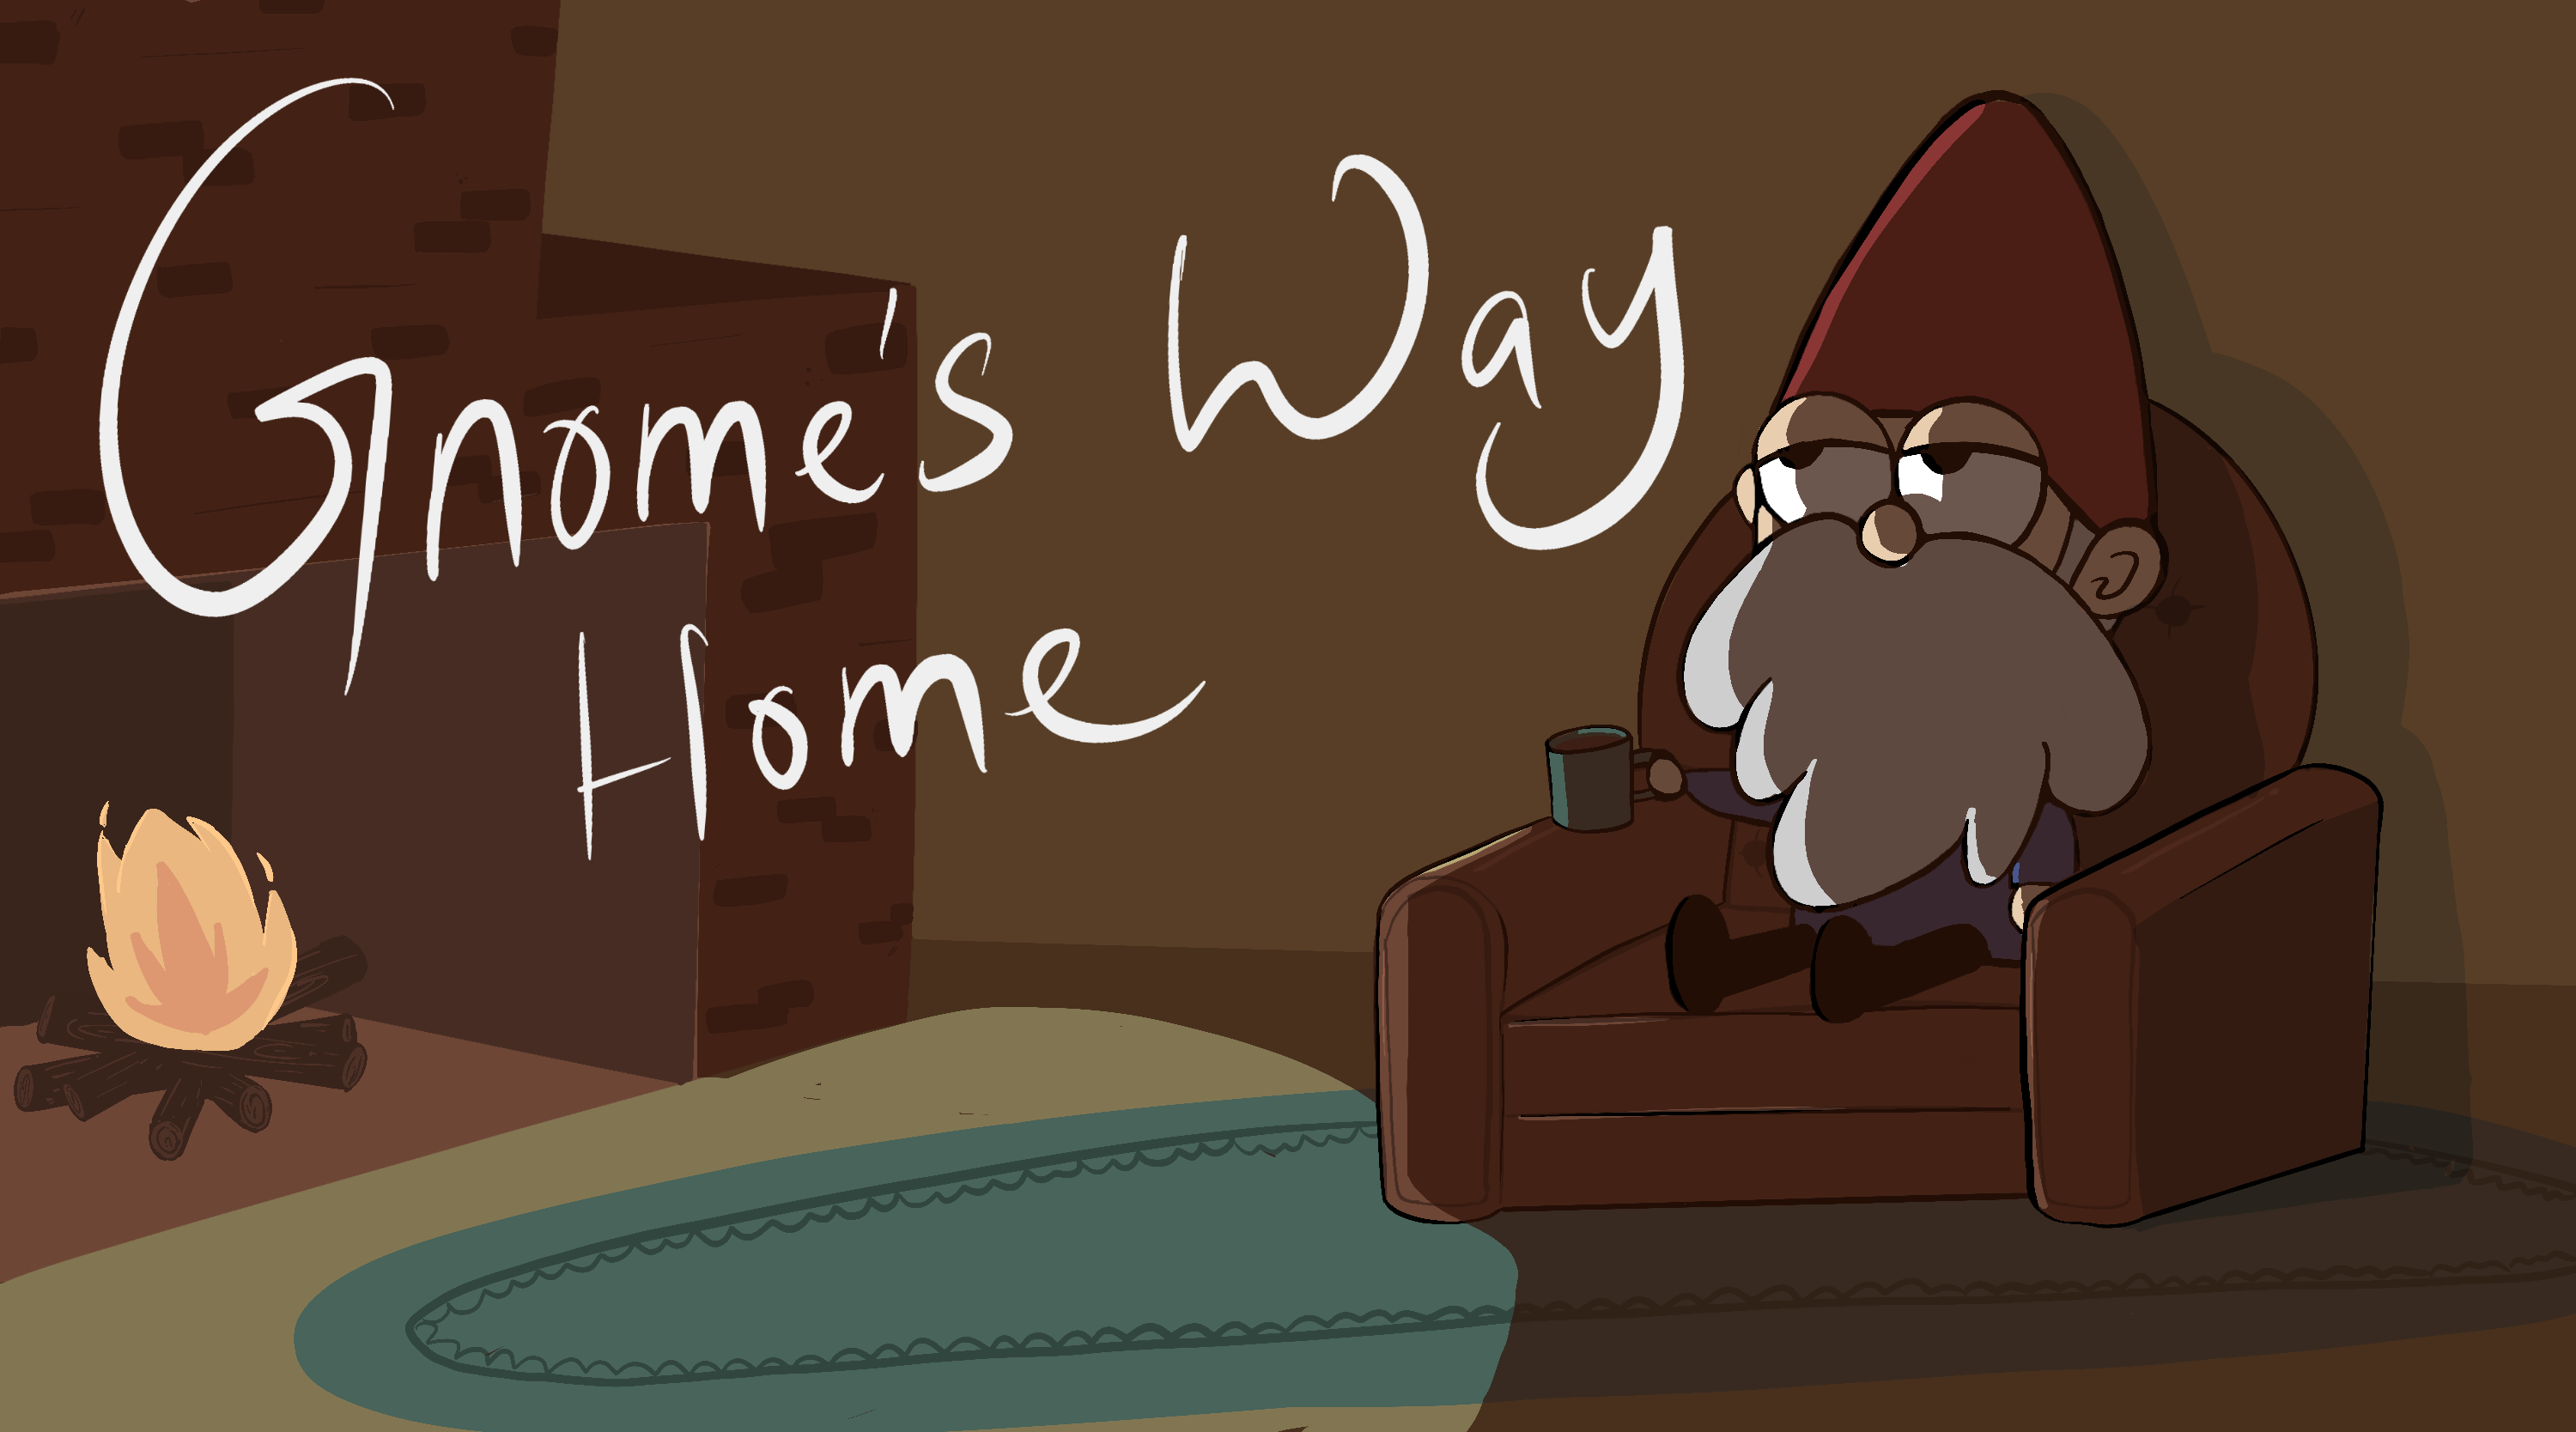 Gnome's Way Home